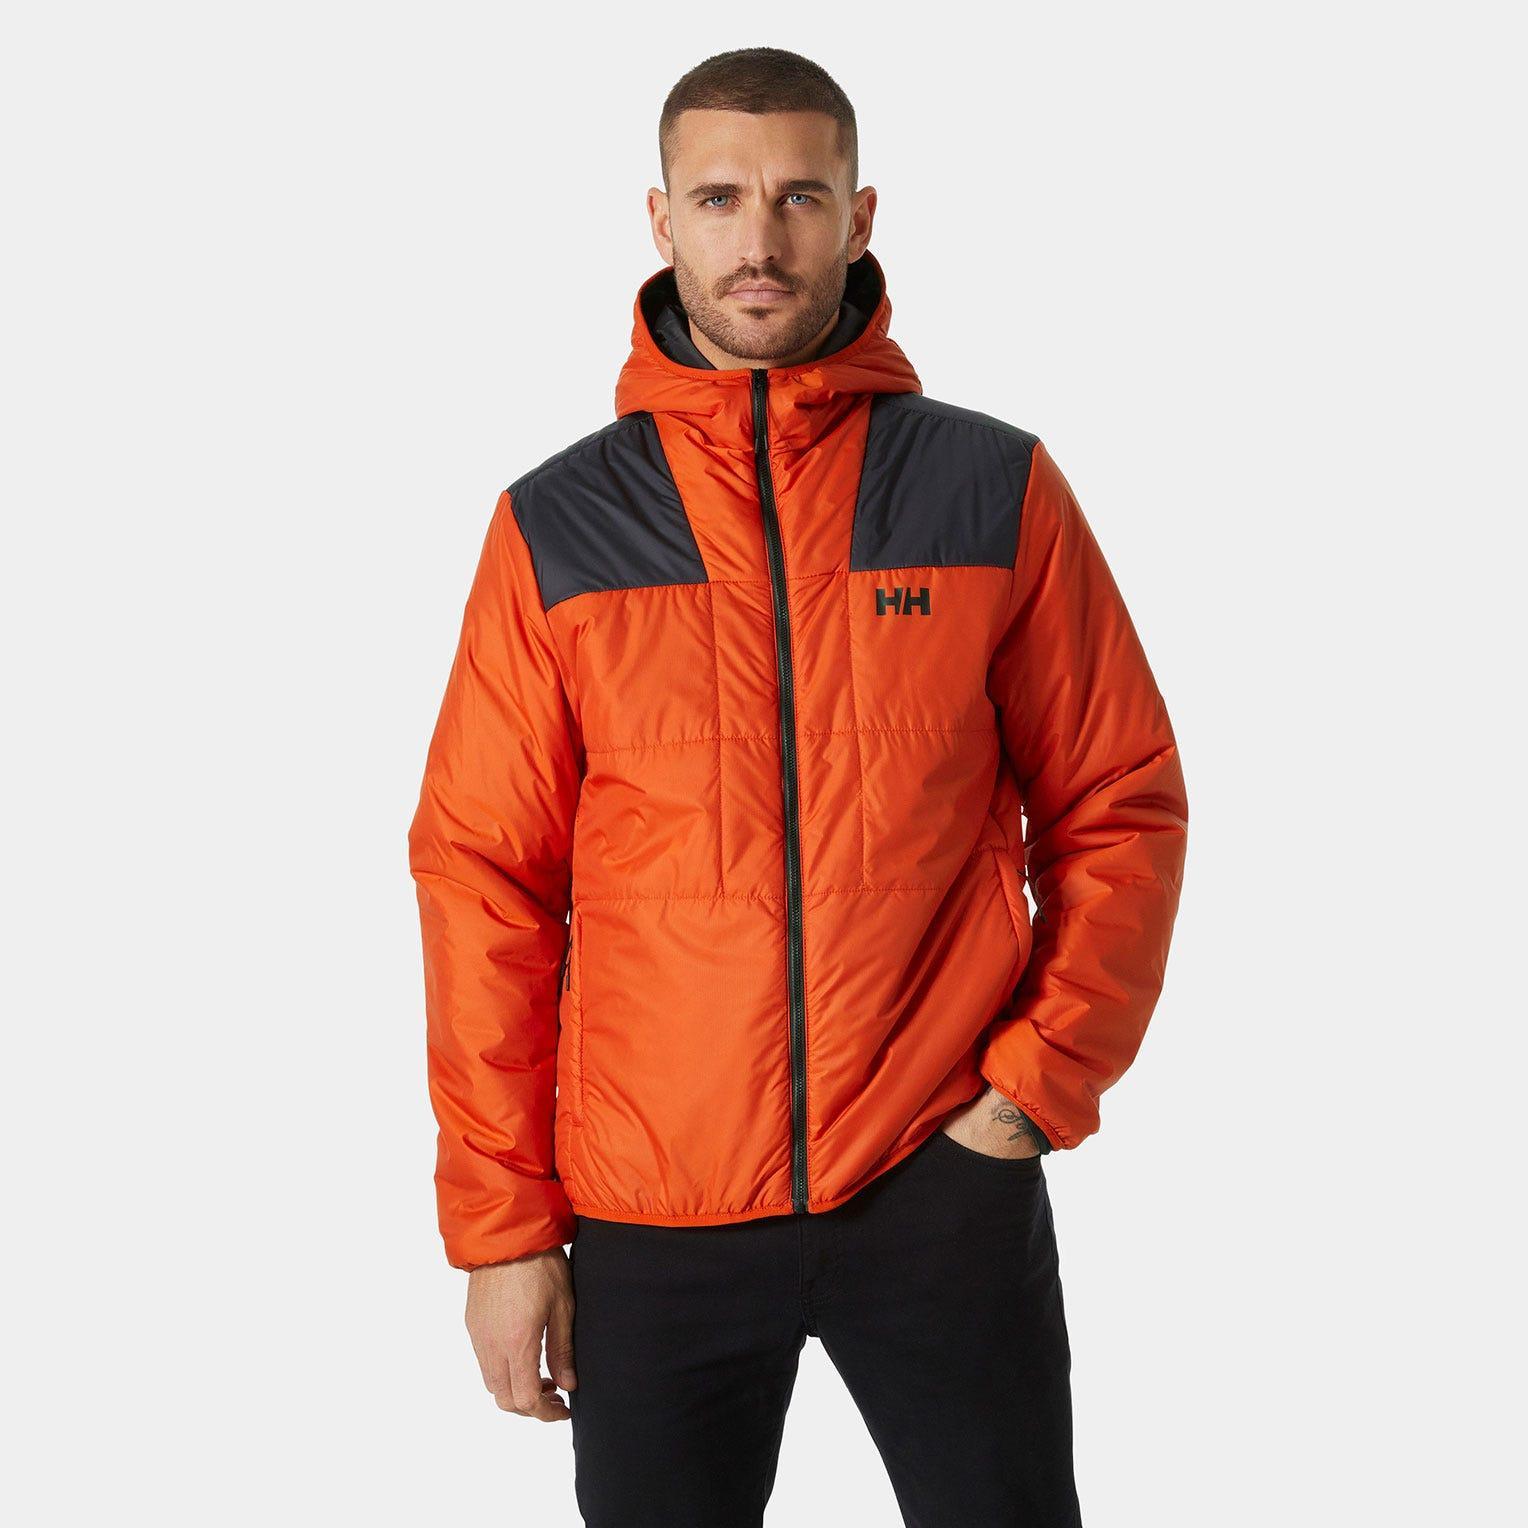 Helly Hansen Men’s Flex Insulated Jacket Orange L Product Image